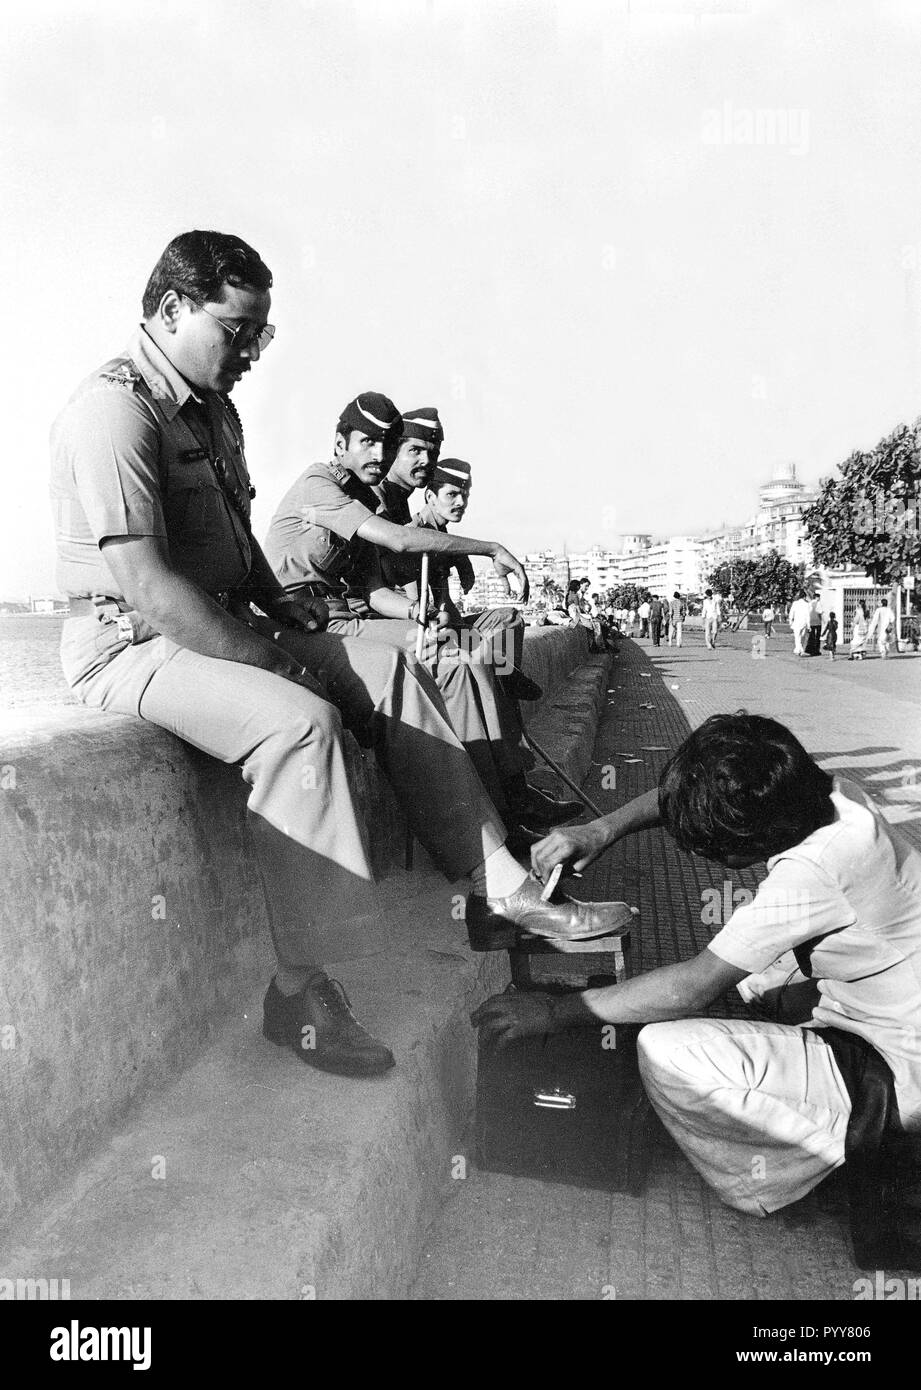 Funzionario di polizia getting calzatura lucidato, Mumbai, Maharashtra, India, Asia 1900s Foto Stock